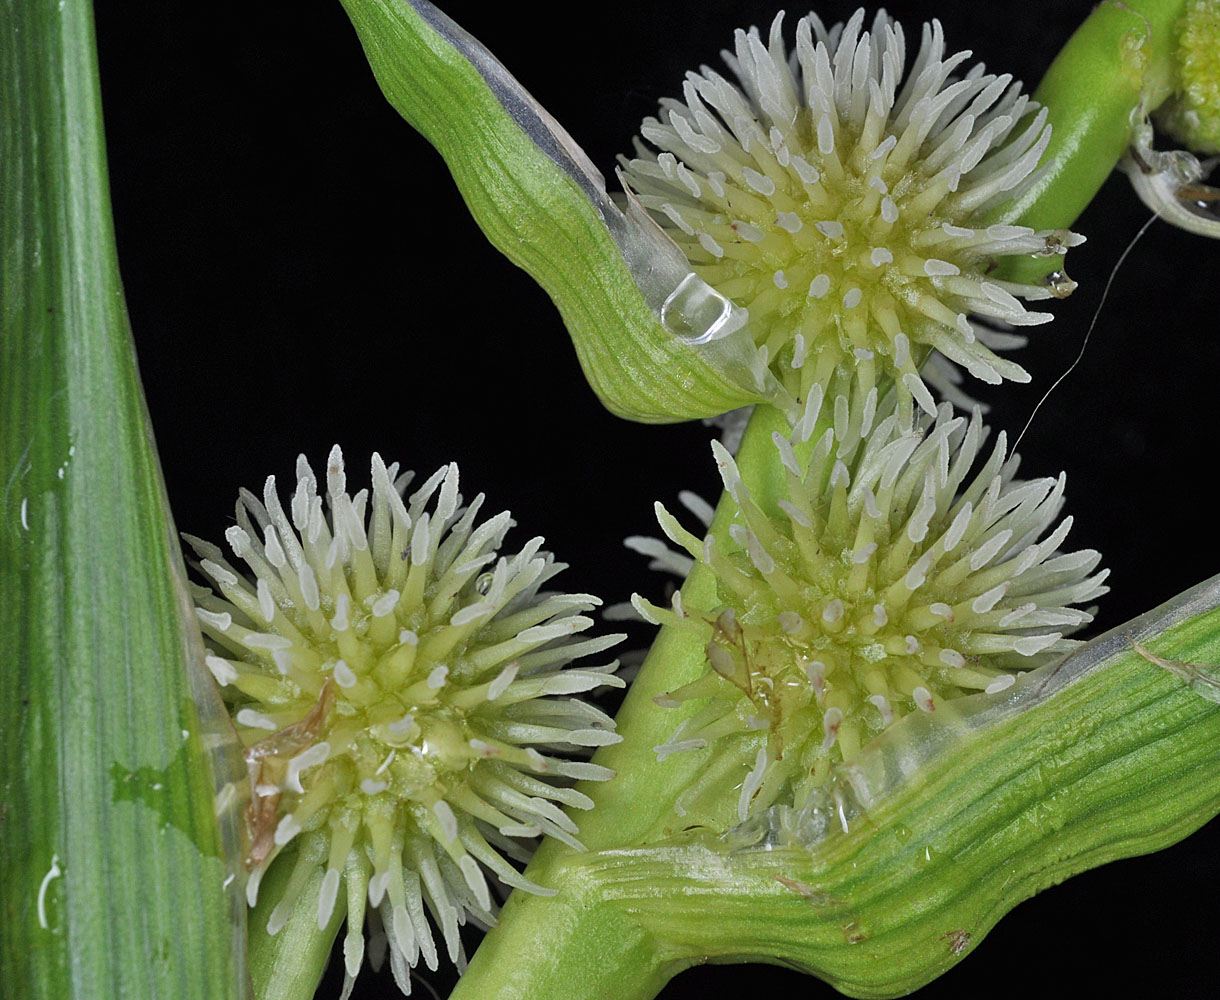 Flora of Eastern Washington Image: Sparganium emersum